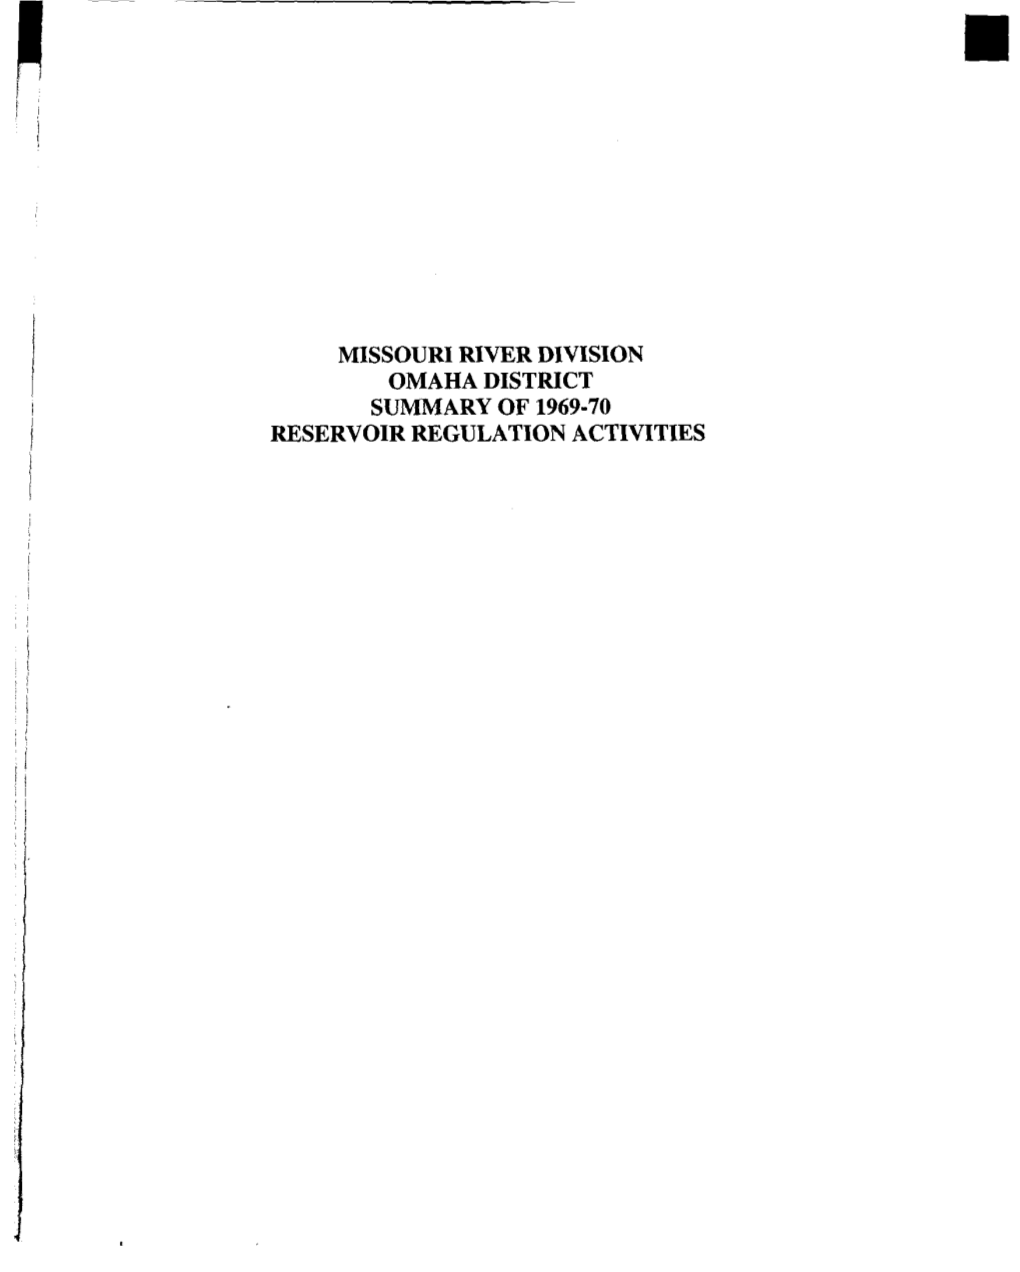 Missouri River Division Omaha District Summary of 1969-70 Reservoir Regulation Activities